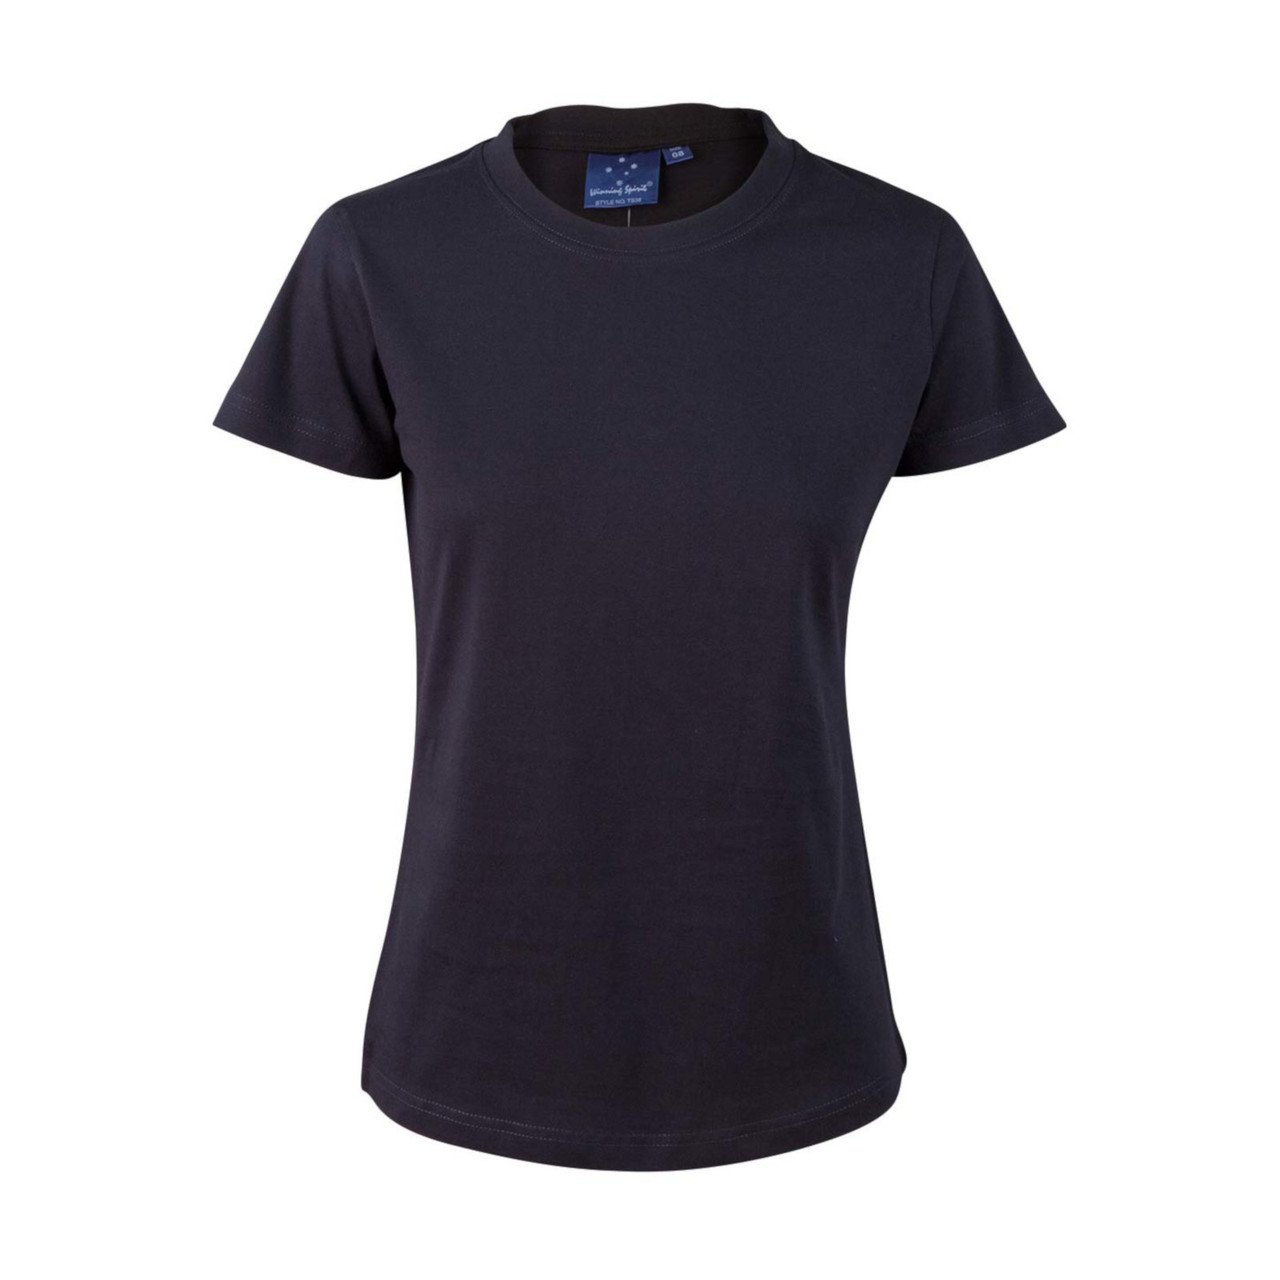 Shop 100% Cotton Semi Fitted Ladies Plain Tshirts | Blank Clothing ...